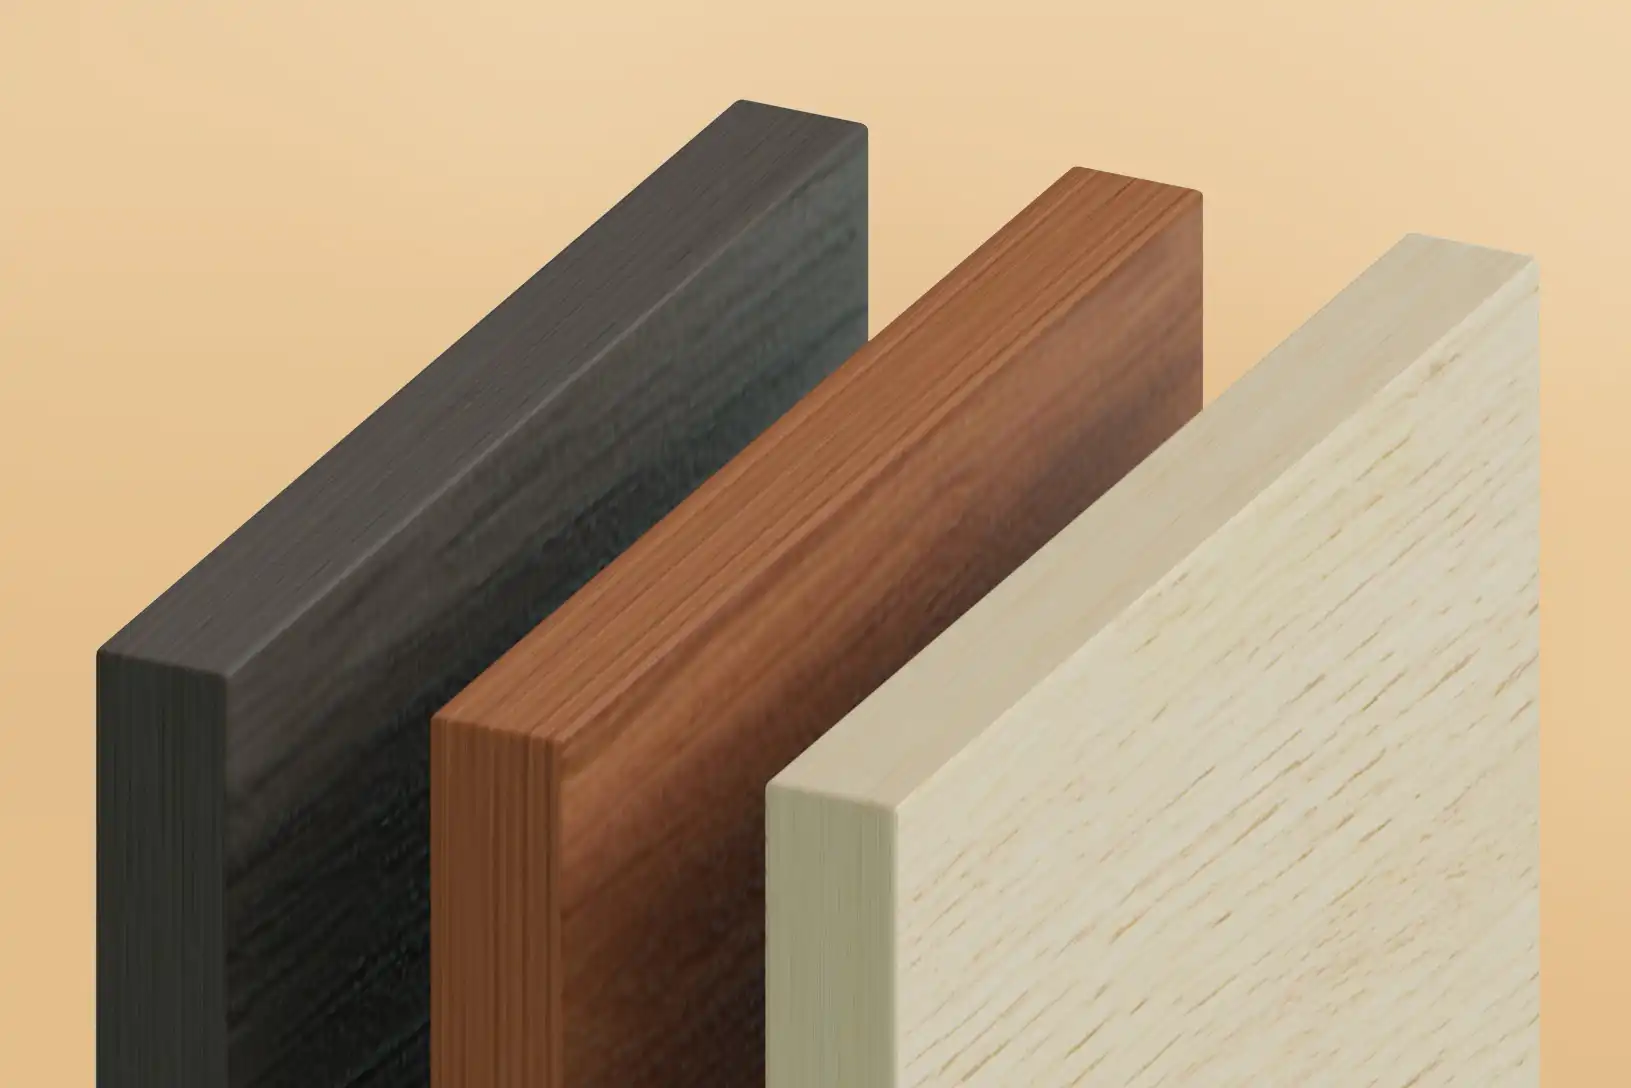 Materialien aus Holz